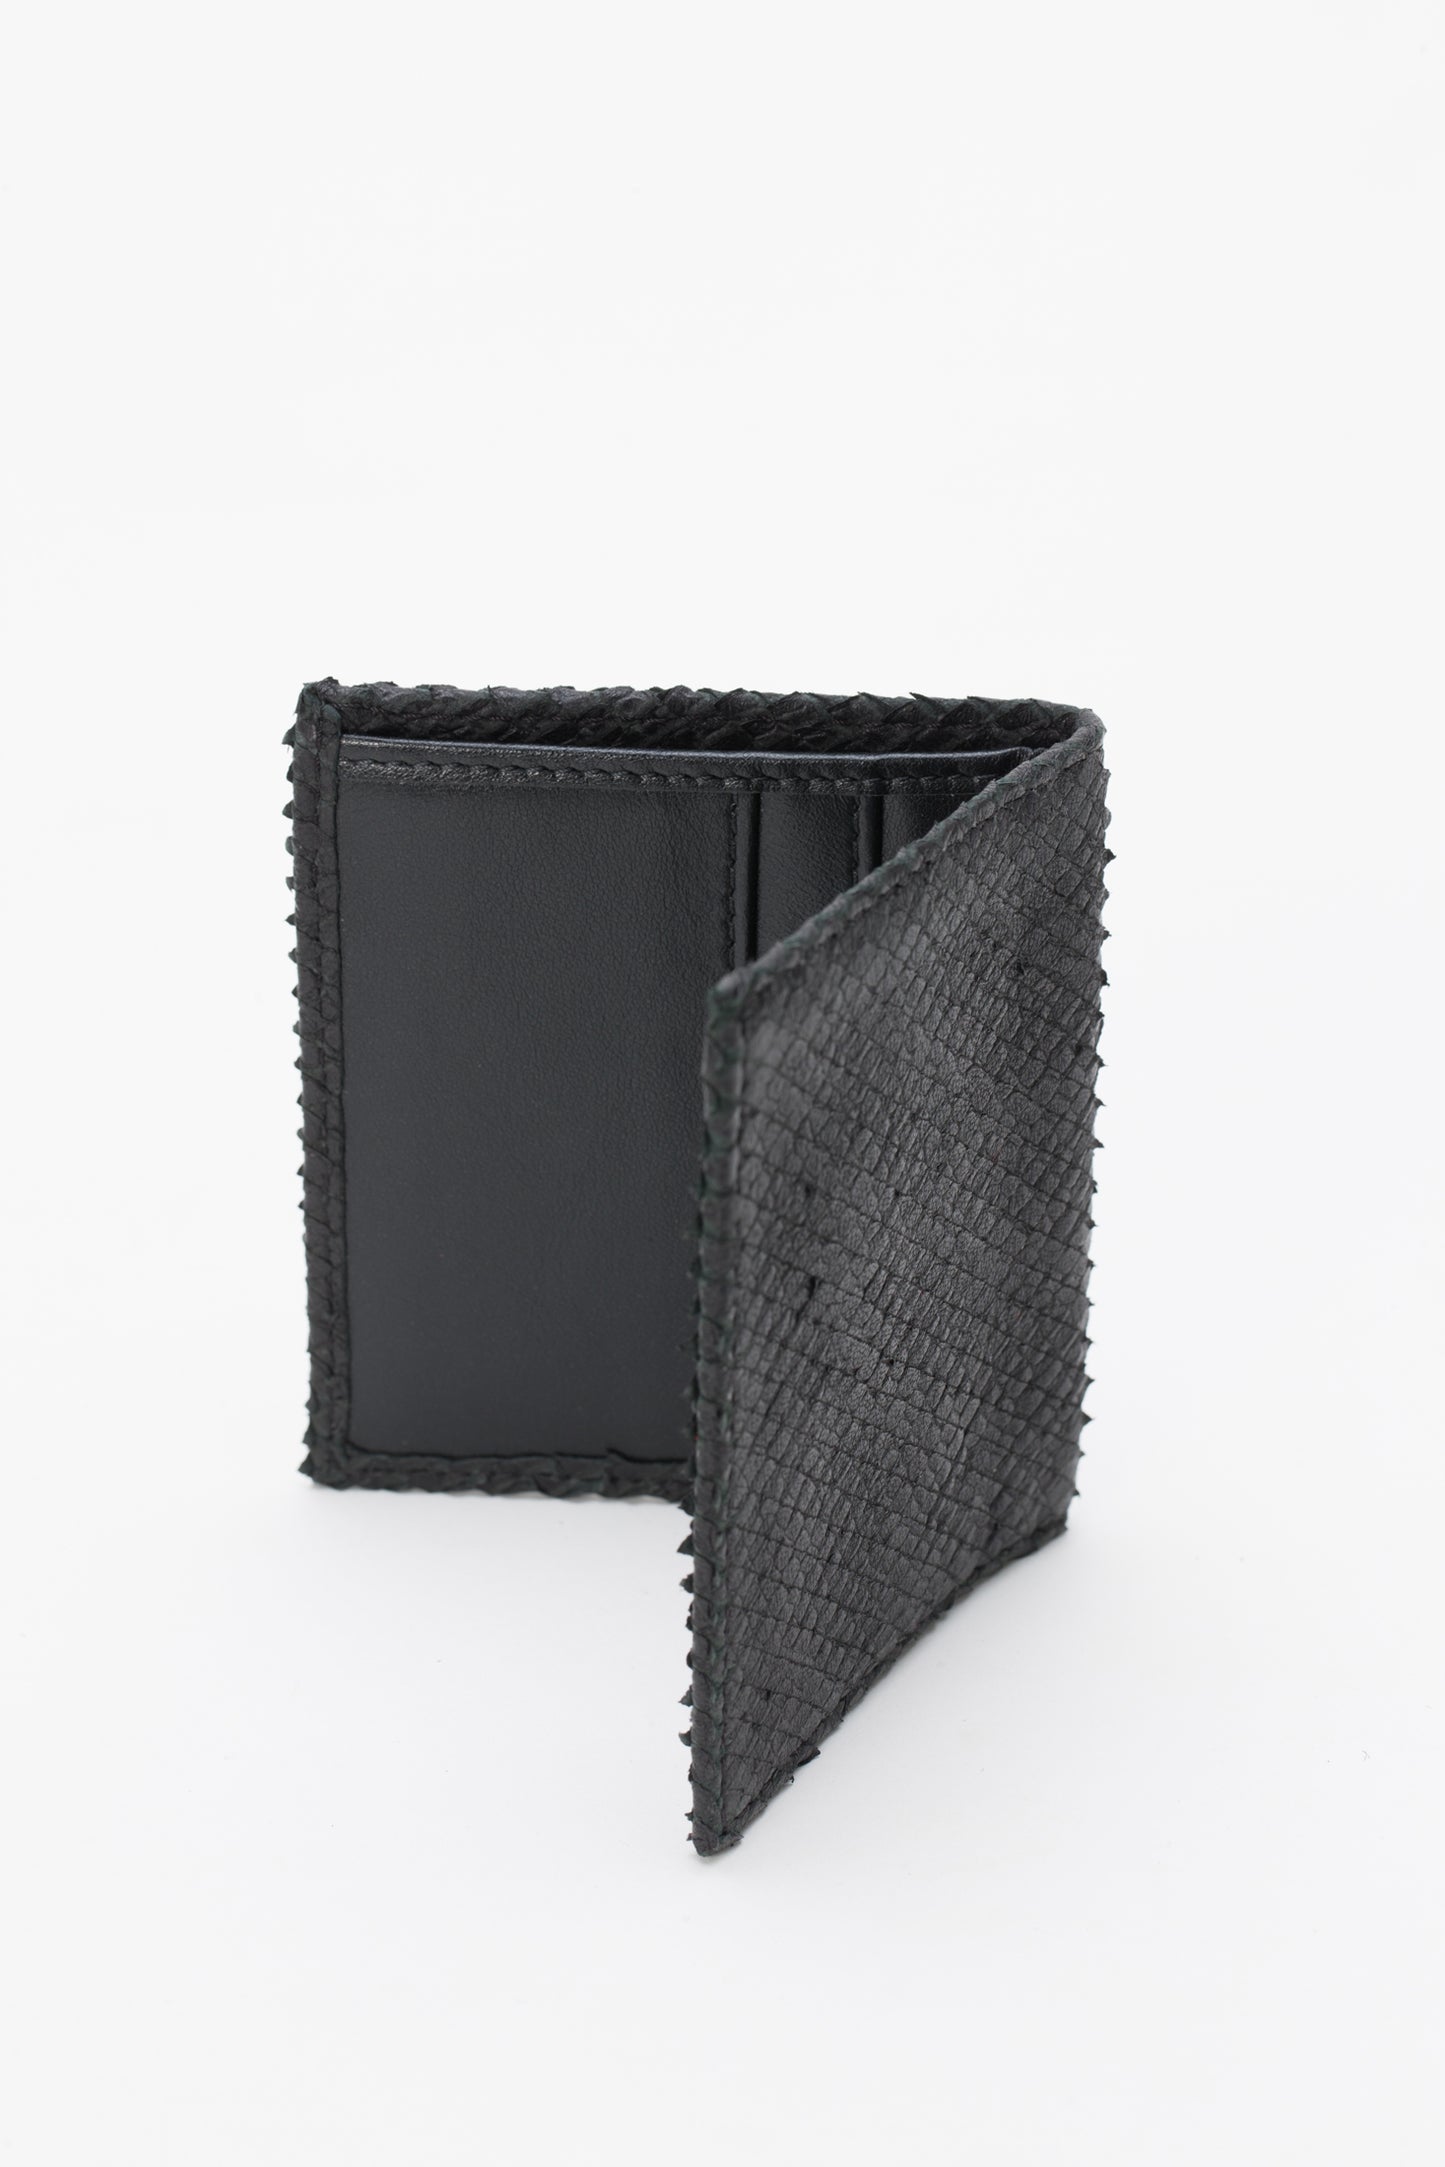 Wallet in sepinak leather